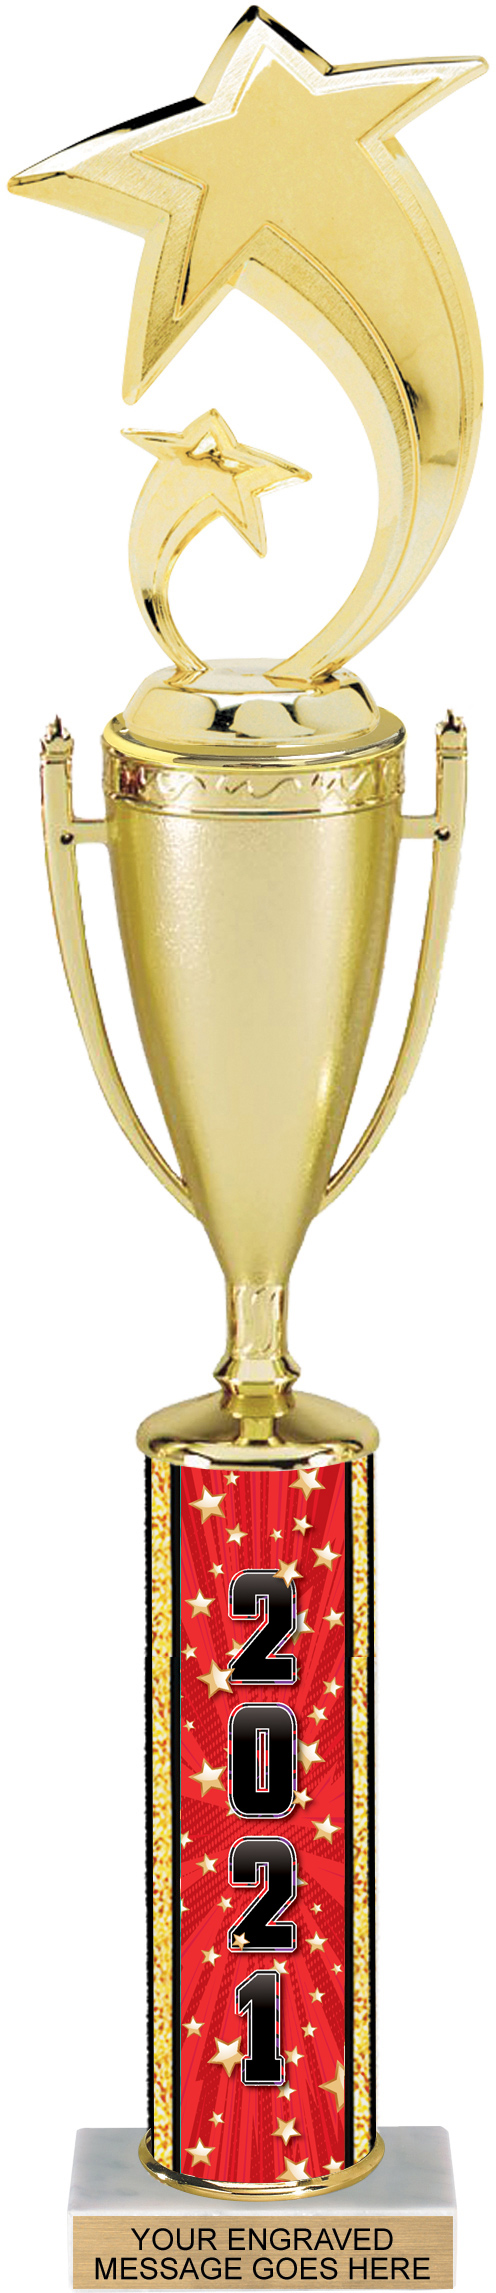 Comic Stars Year Column Cup Trophy - 17 inch